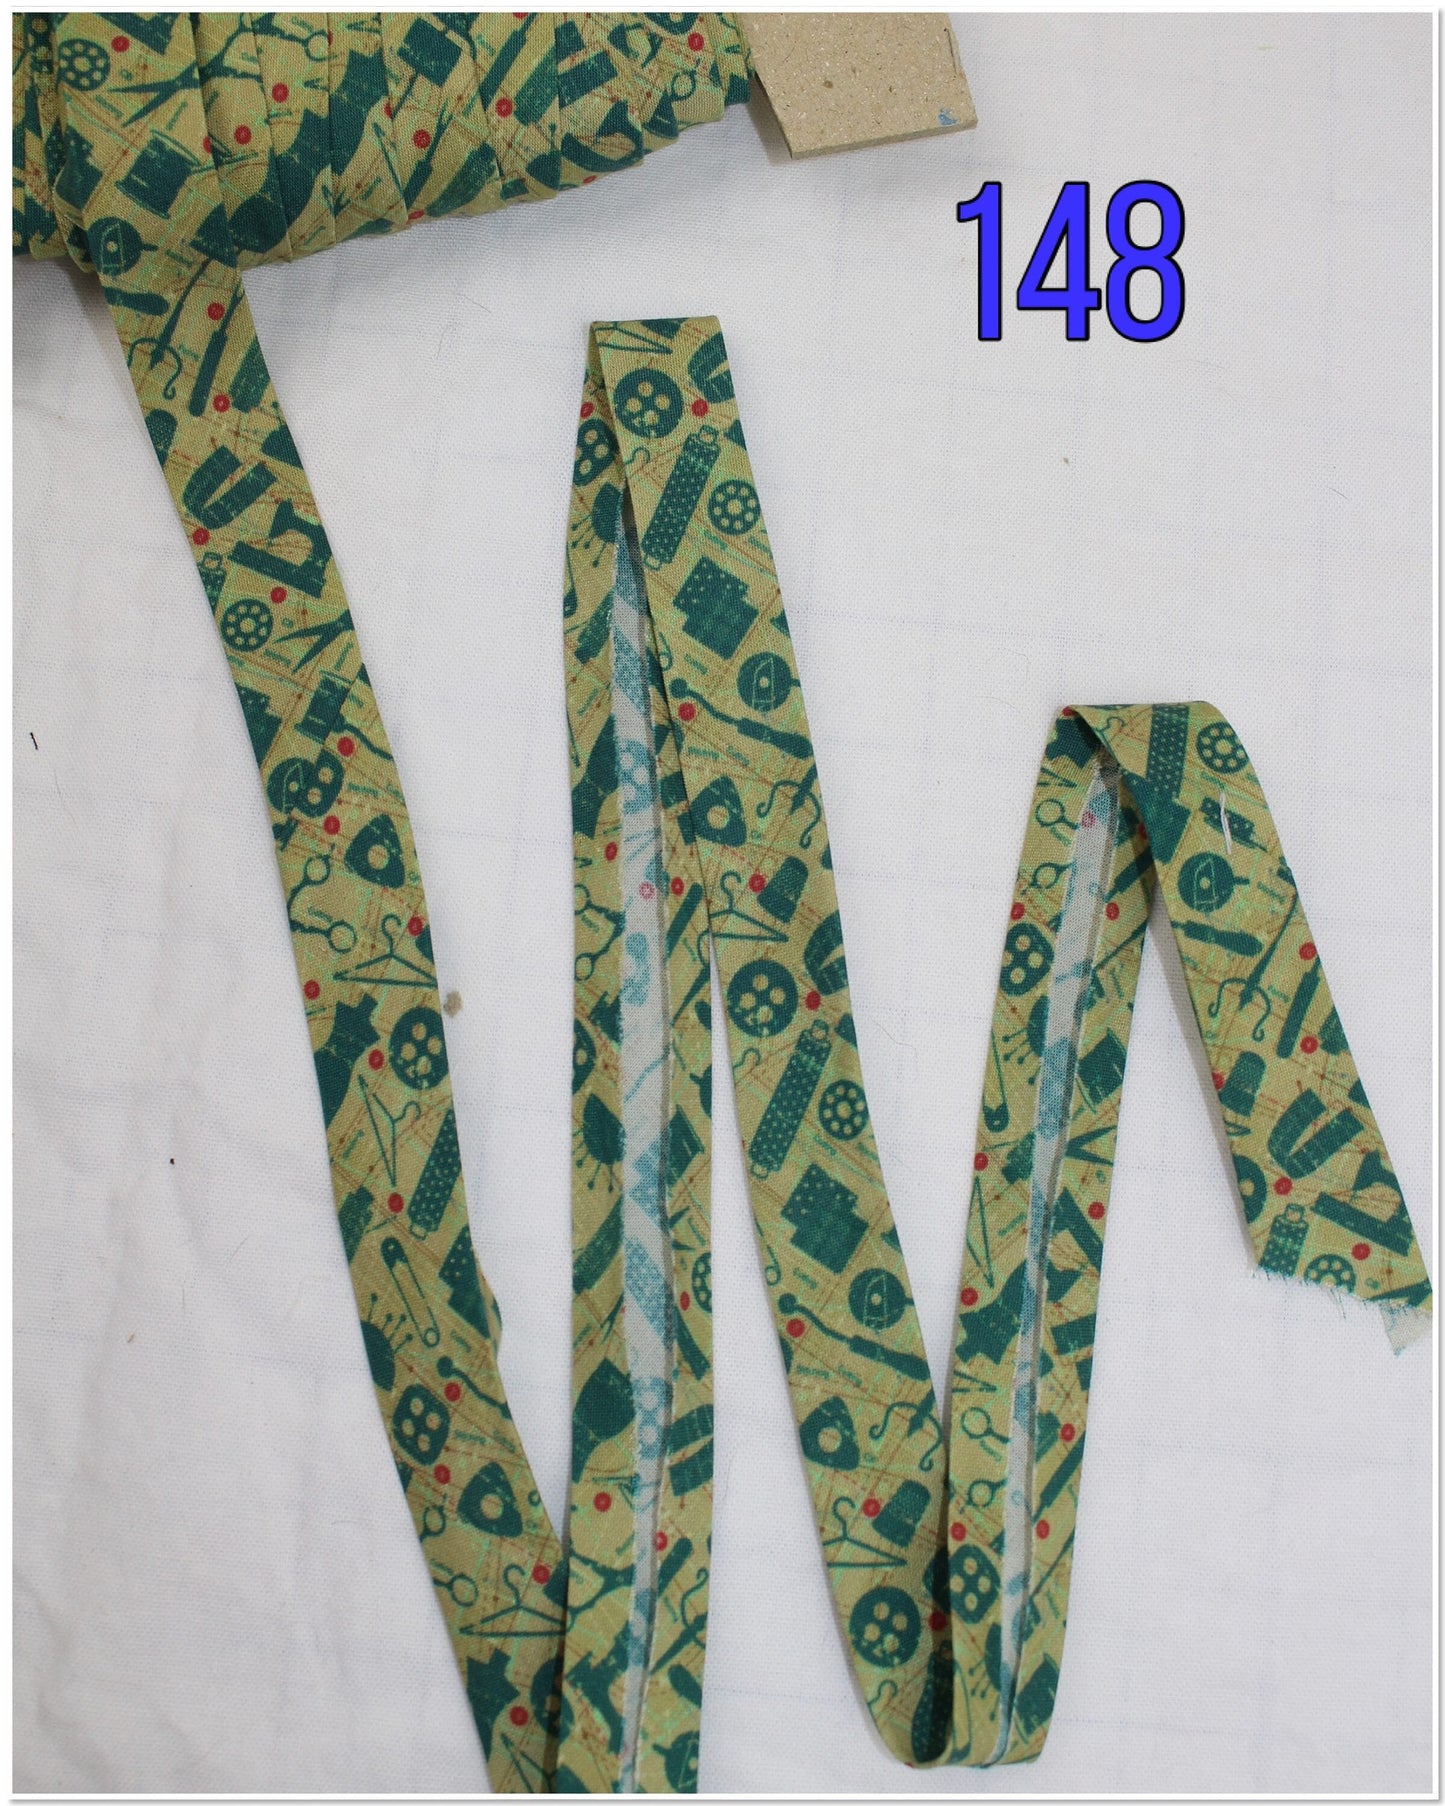 Bias Binding (tape) 25mm sewing pattern and squares. Cotton.